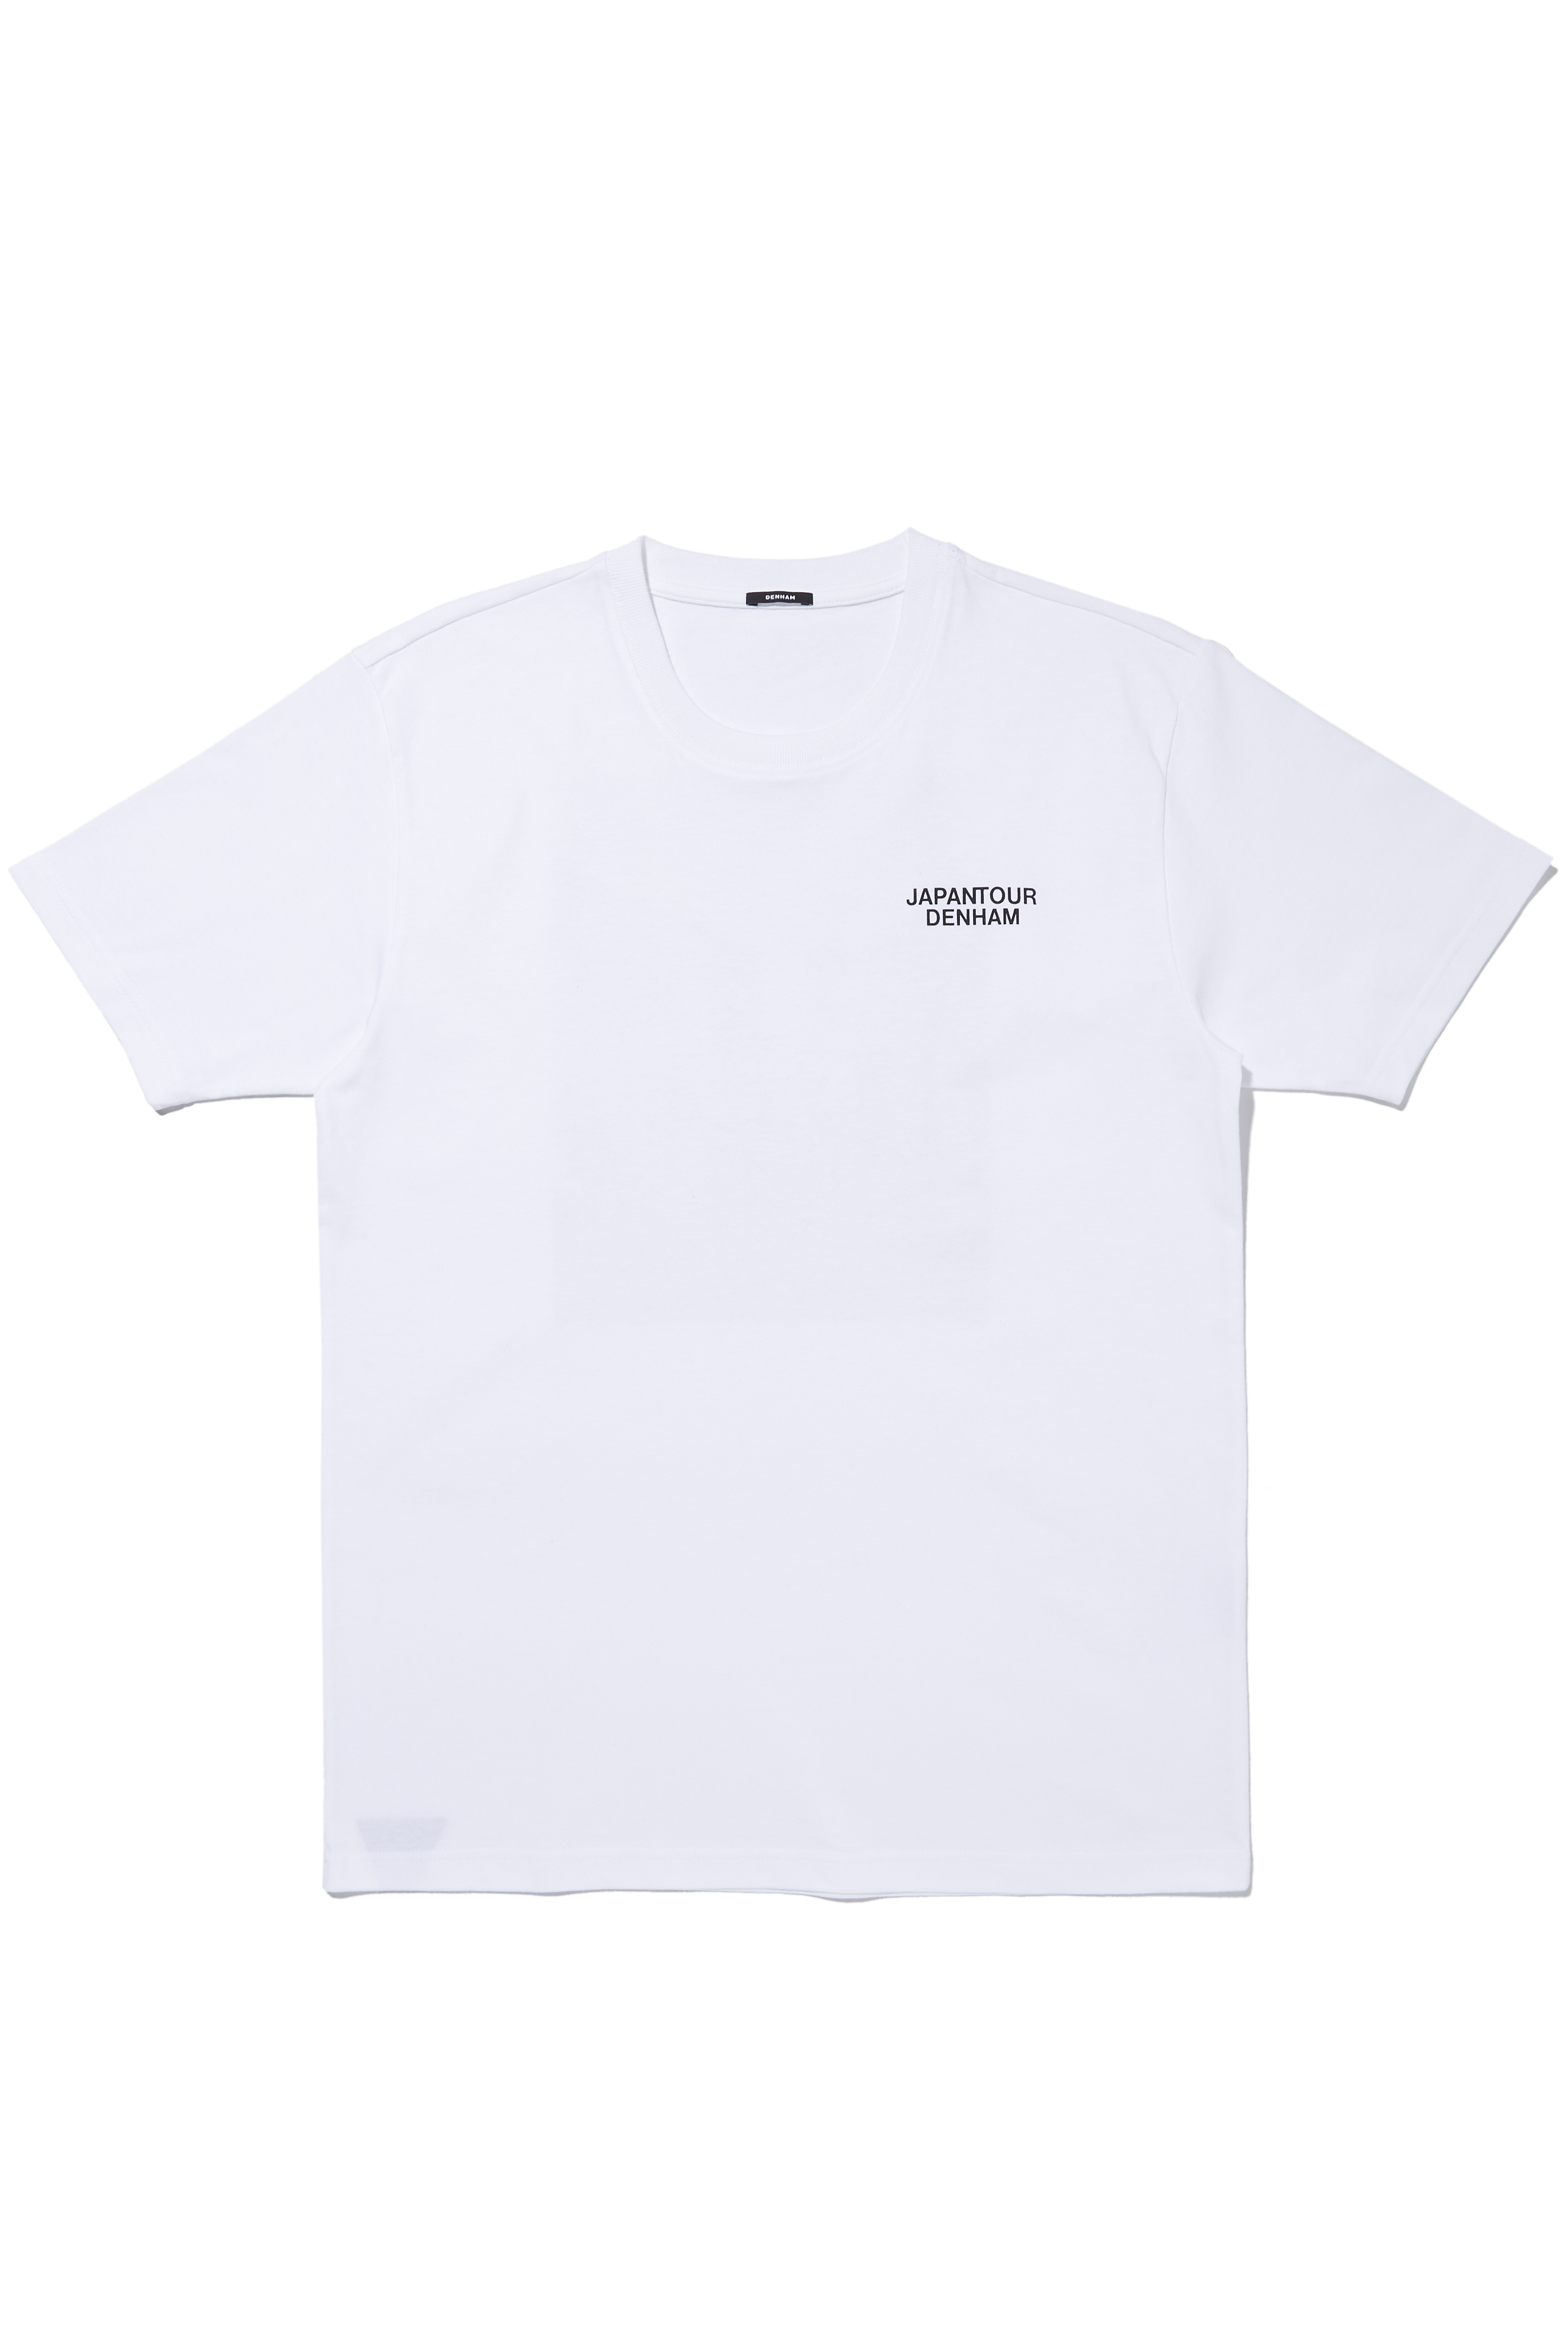 DENHAM 01-22-02-52-200 SHIBA REGULAR TEE HCJ Herren T-Shirt mit Rückenprint WHITE 1